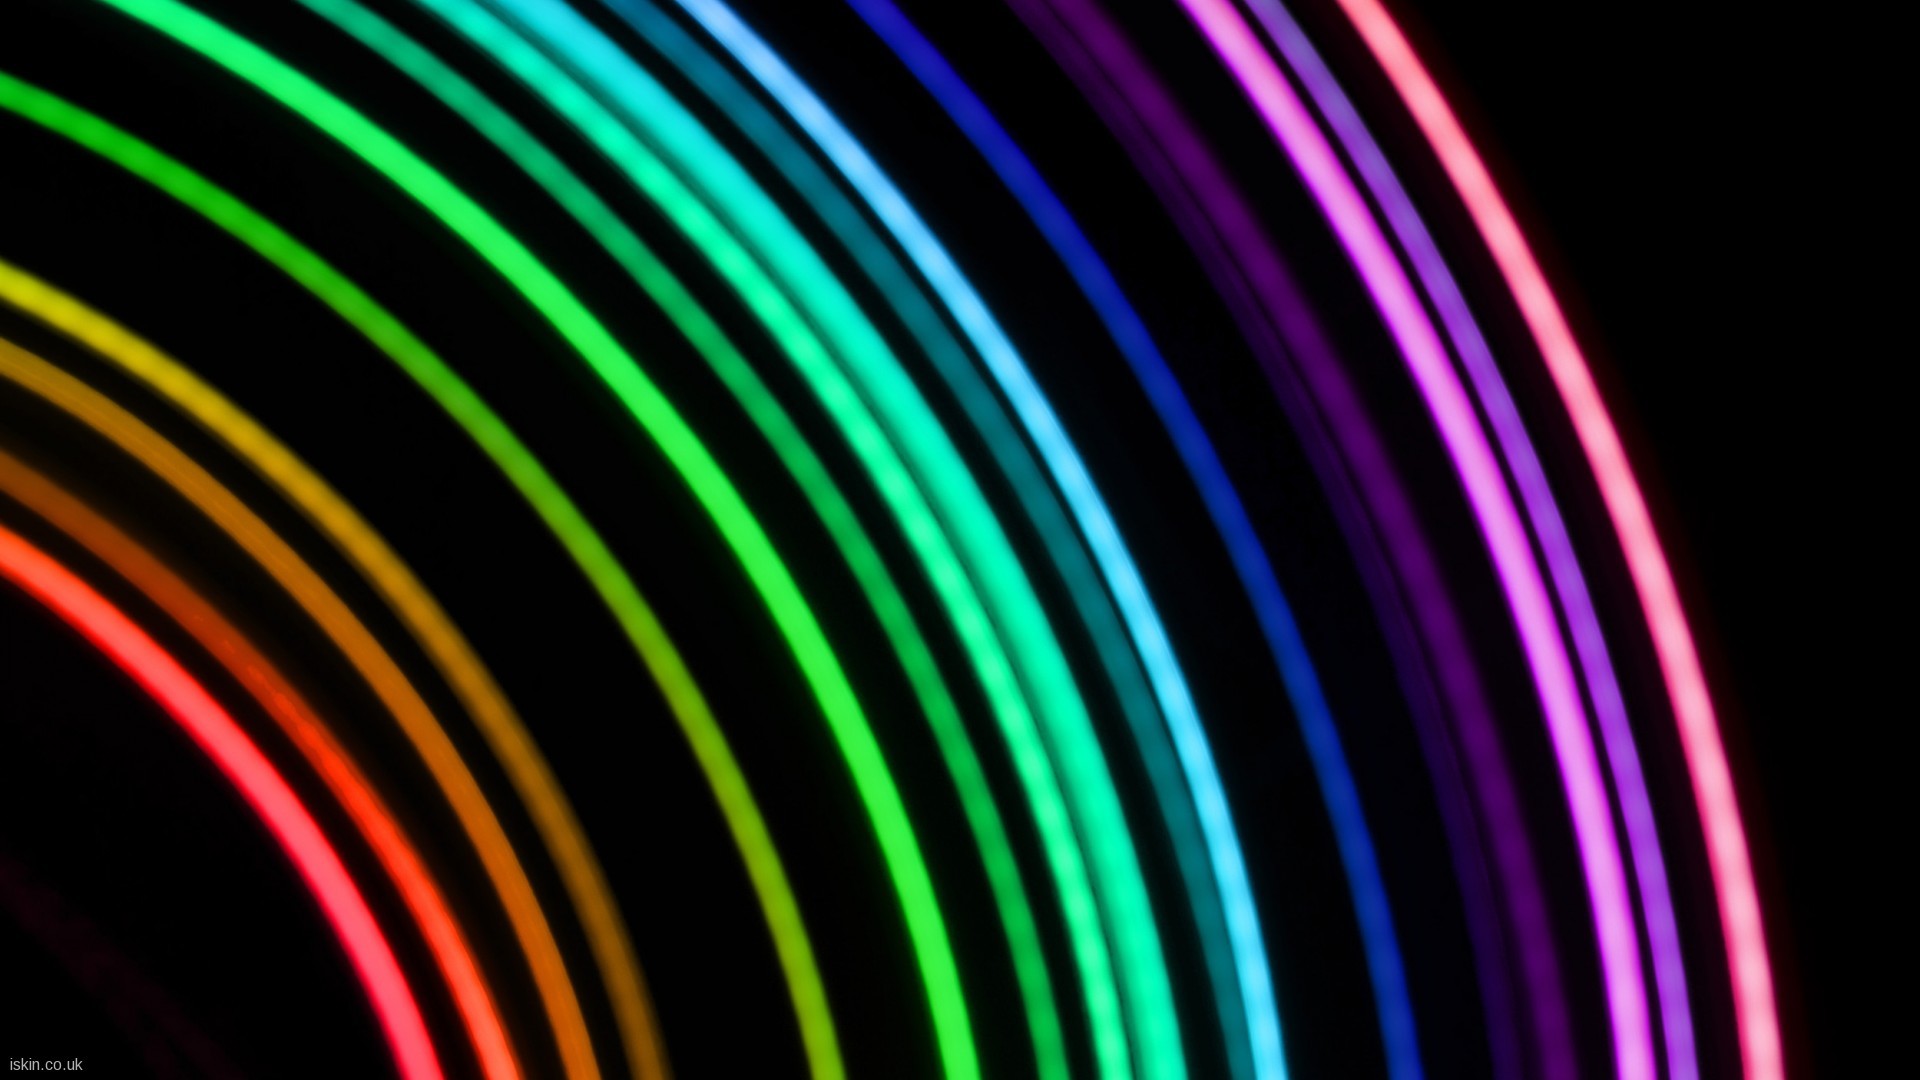 Neon Rainbow Aesthetic Wallpapers